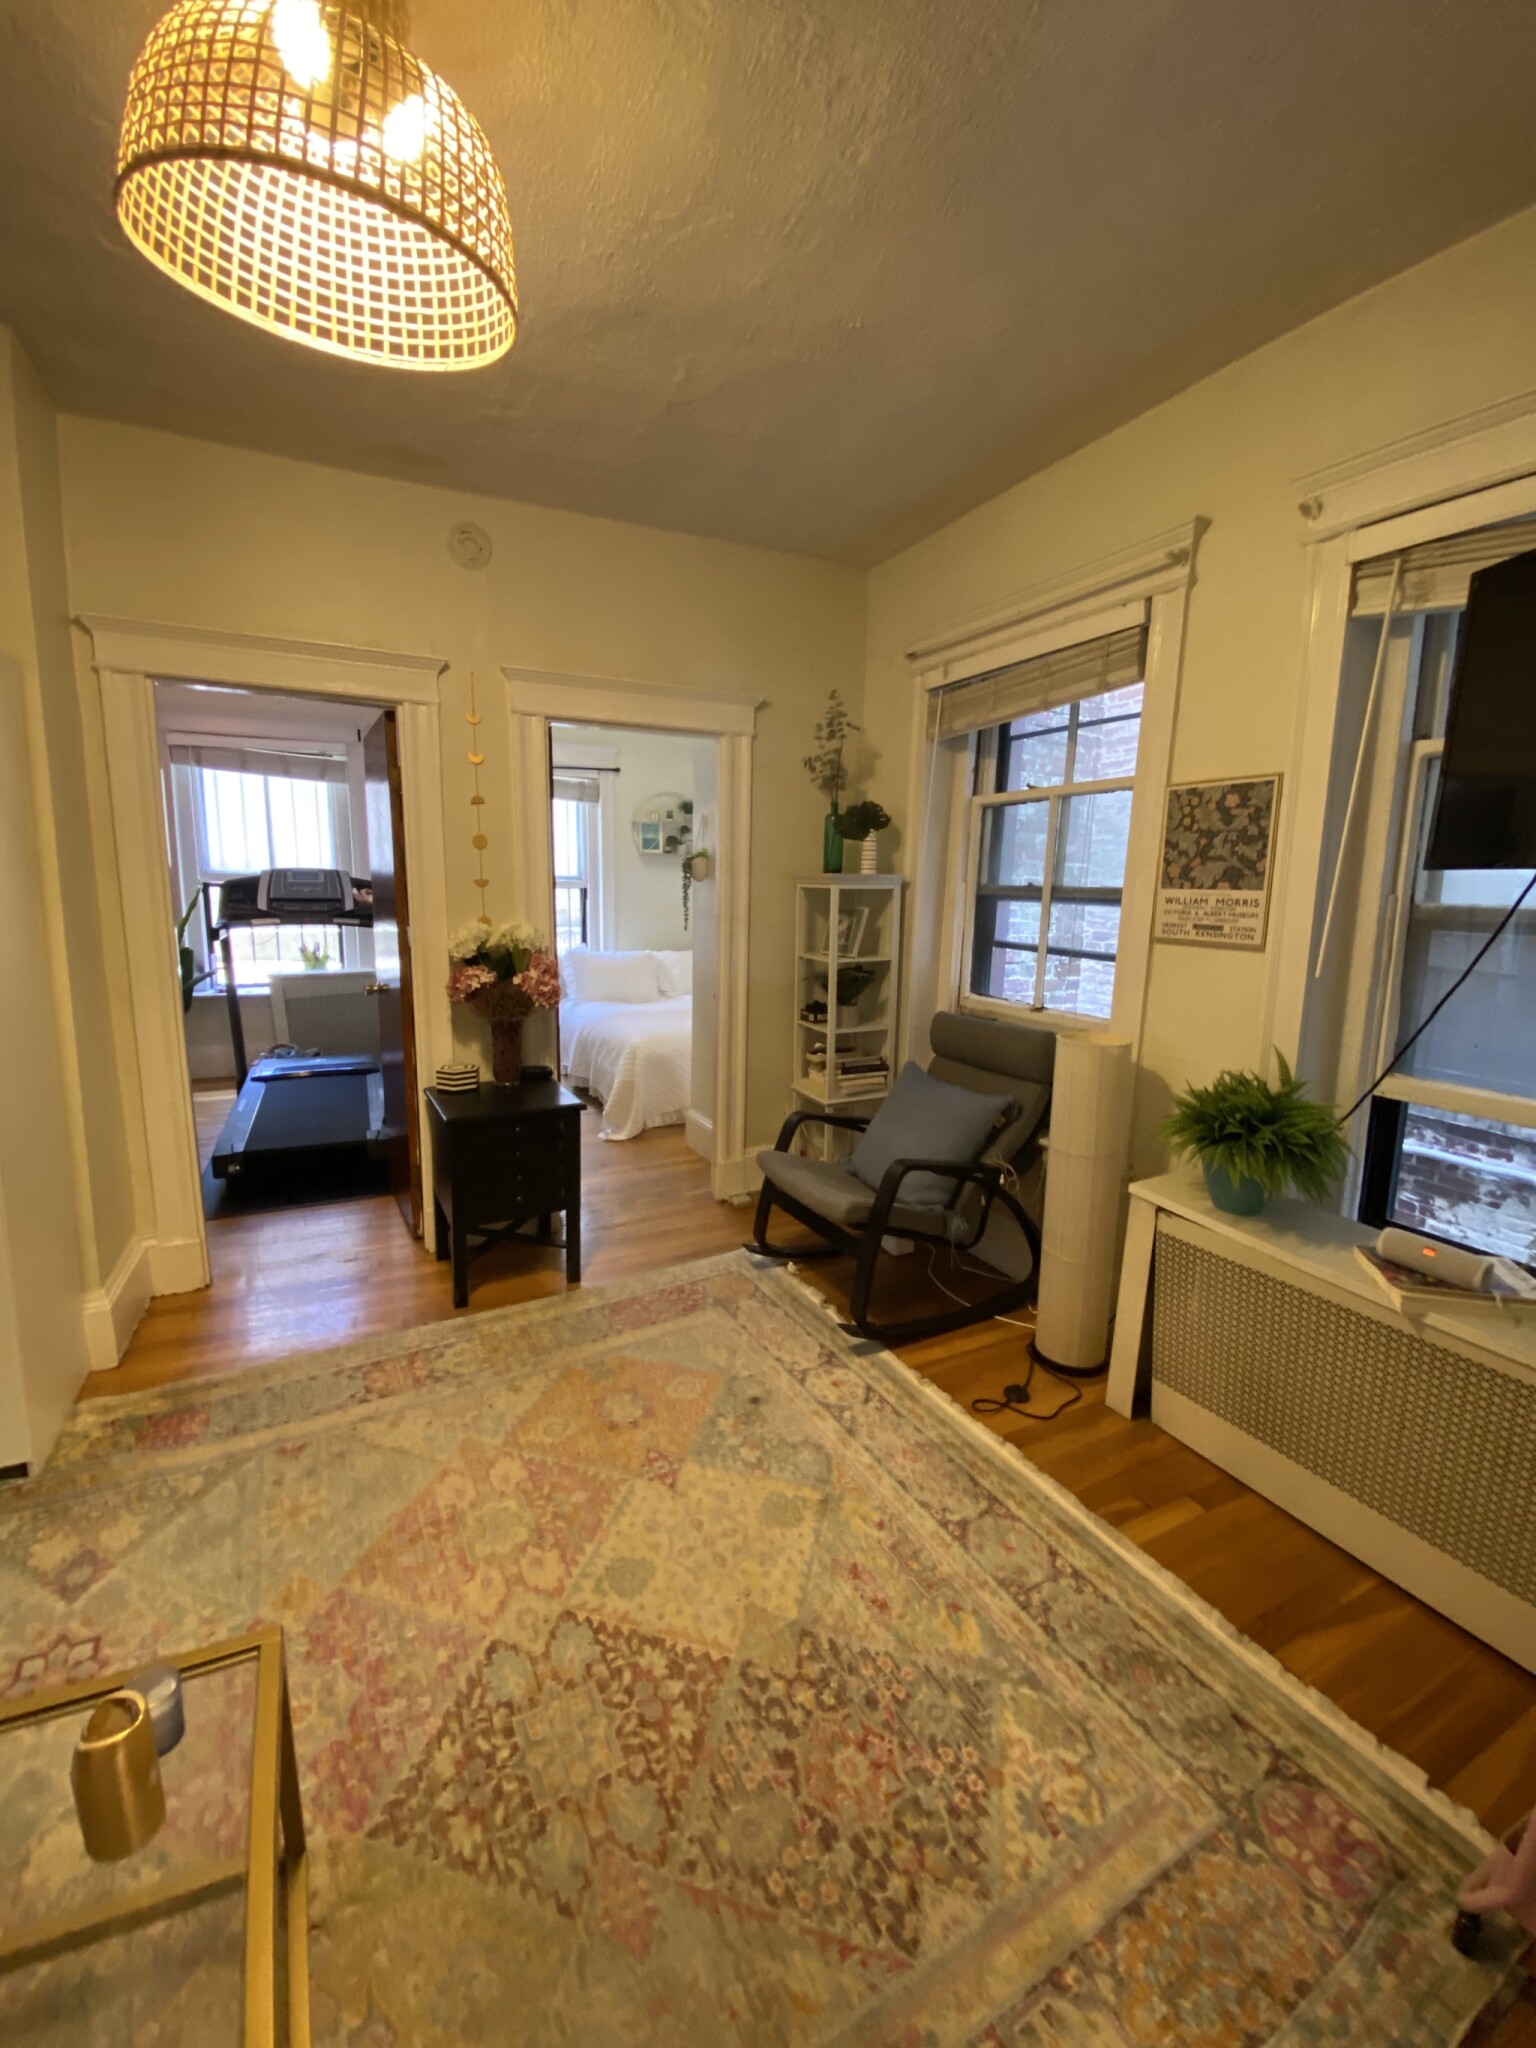 Photos of apartment on Lomasney Way,Boston MA 02114